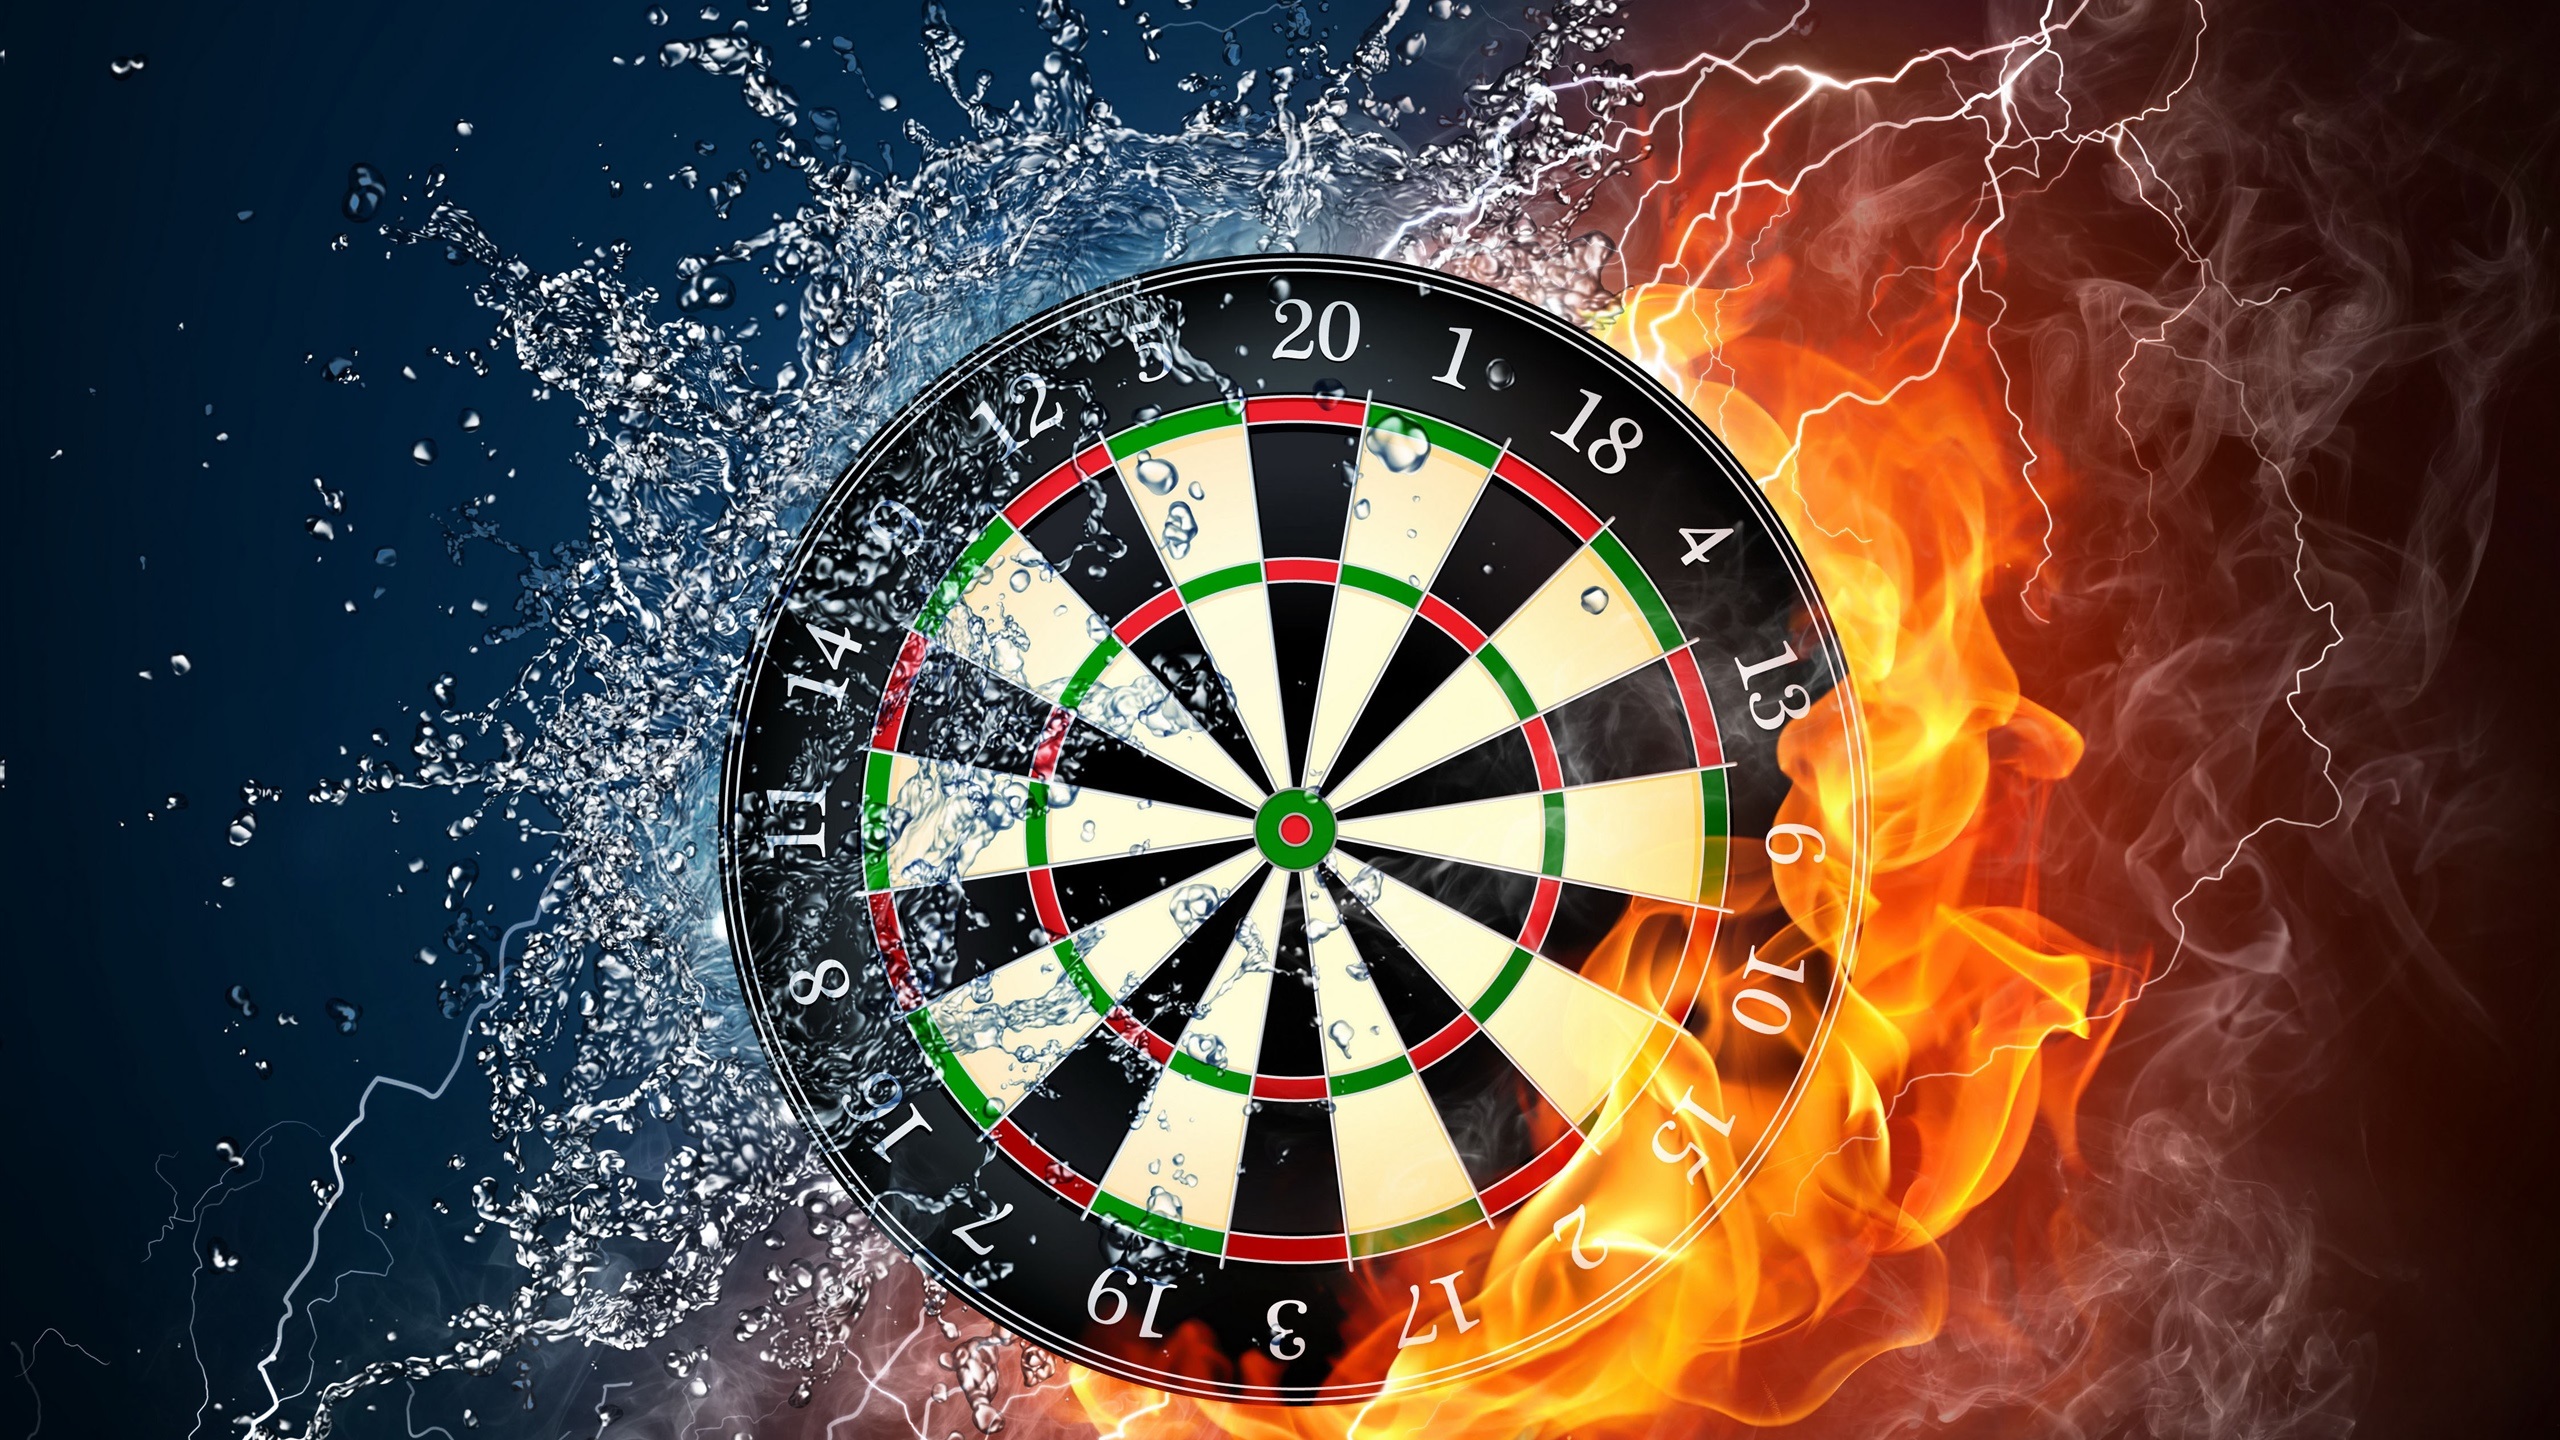 General 2560x1440 targets darts fire water artwork